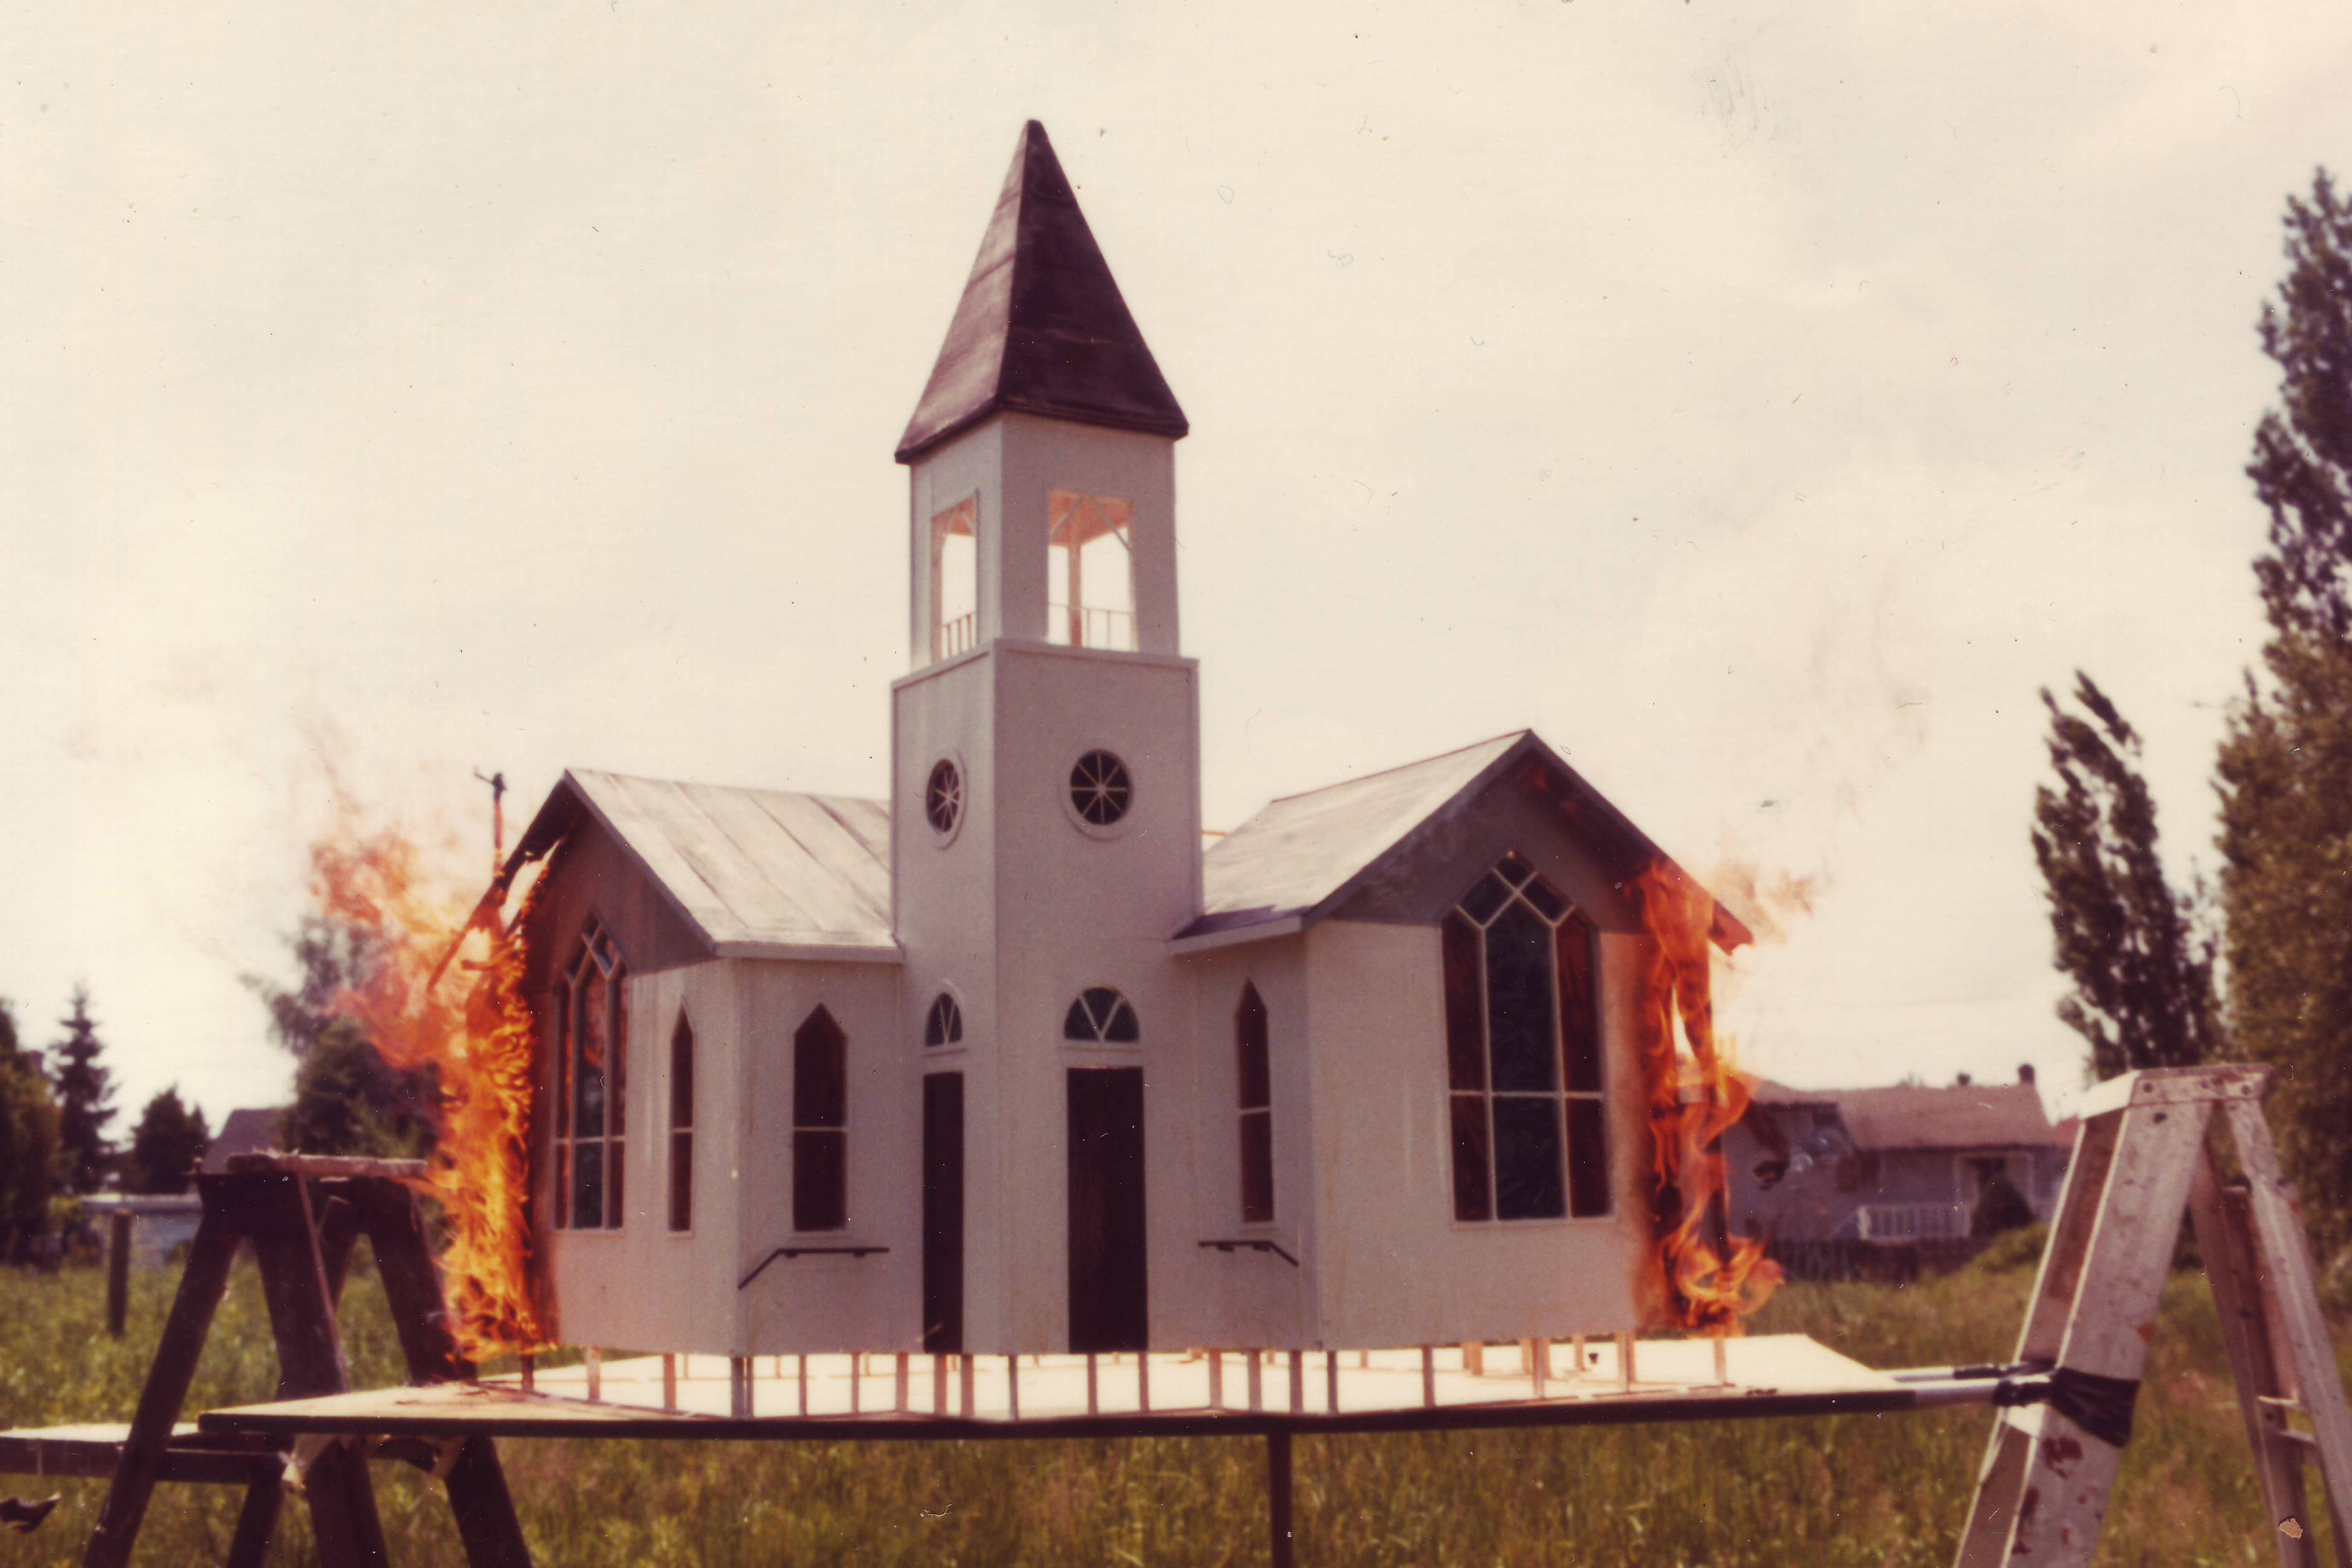 The Minoru Chapel model burns in the 1979 film 